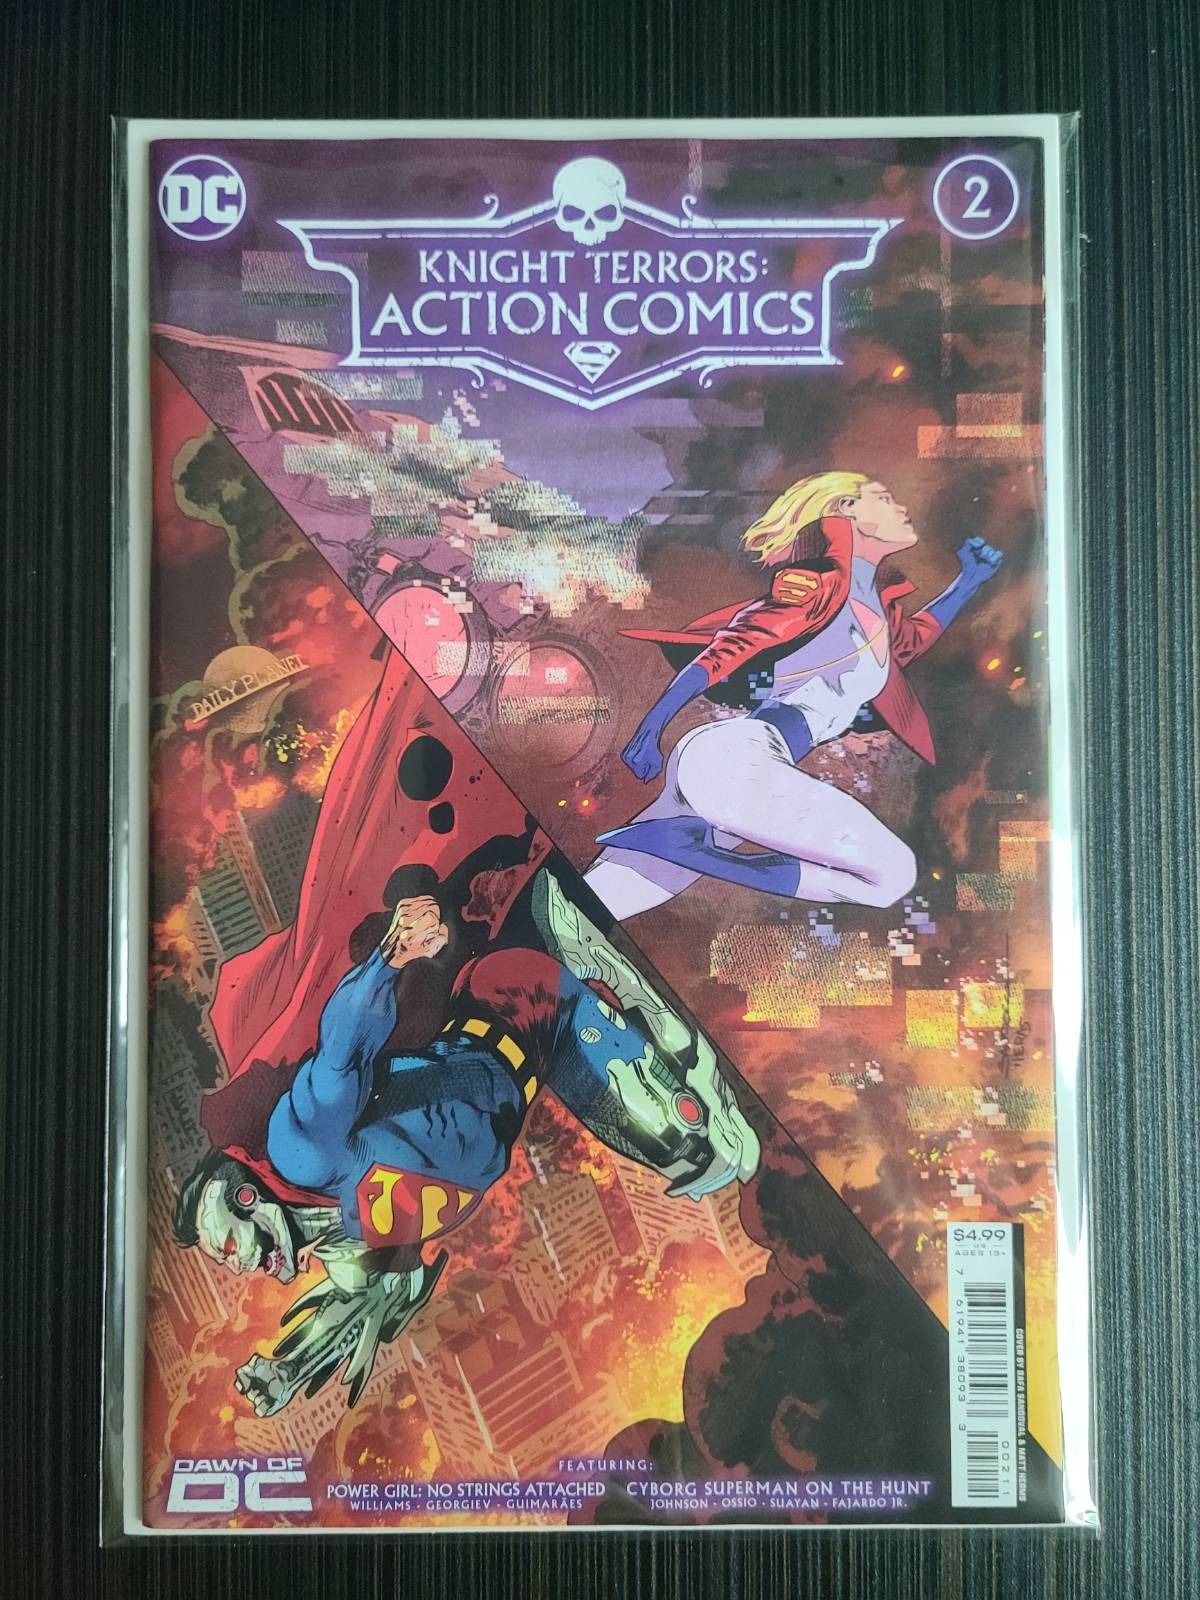 Knight Terrors Action Comics #2 (of 2) Cover A Rafa Sandoval